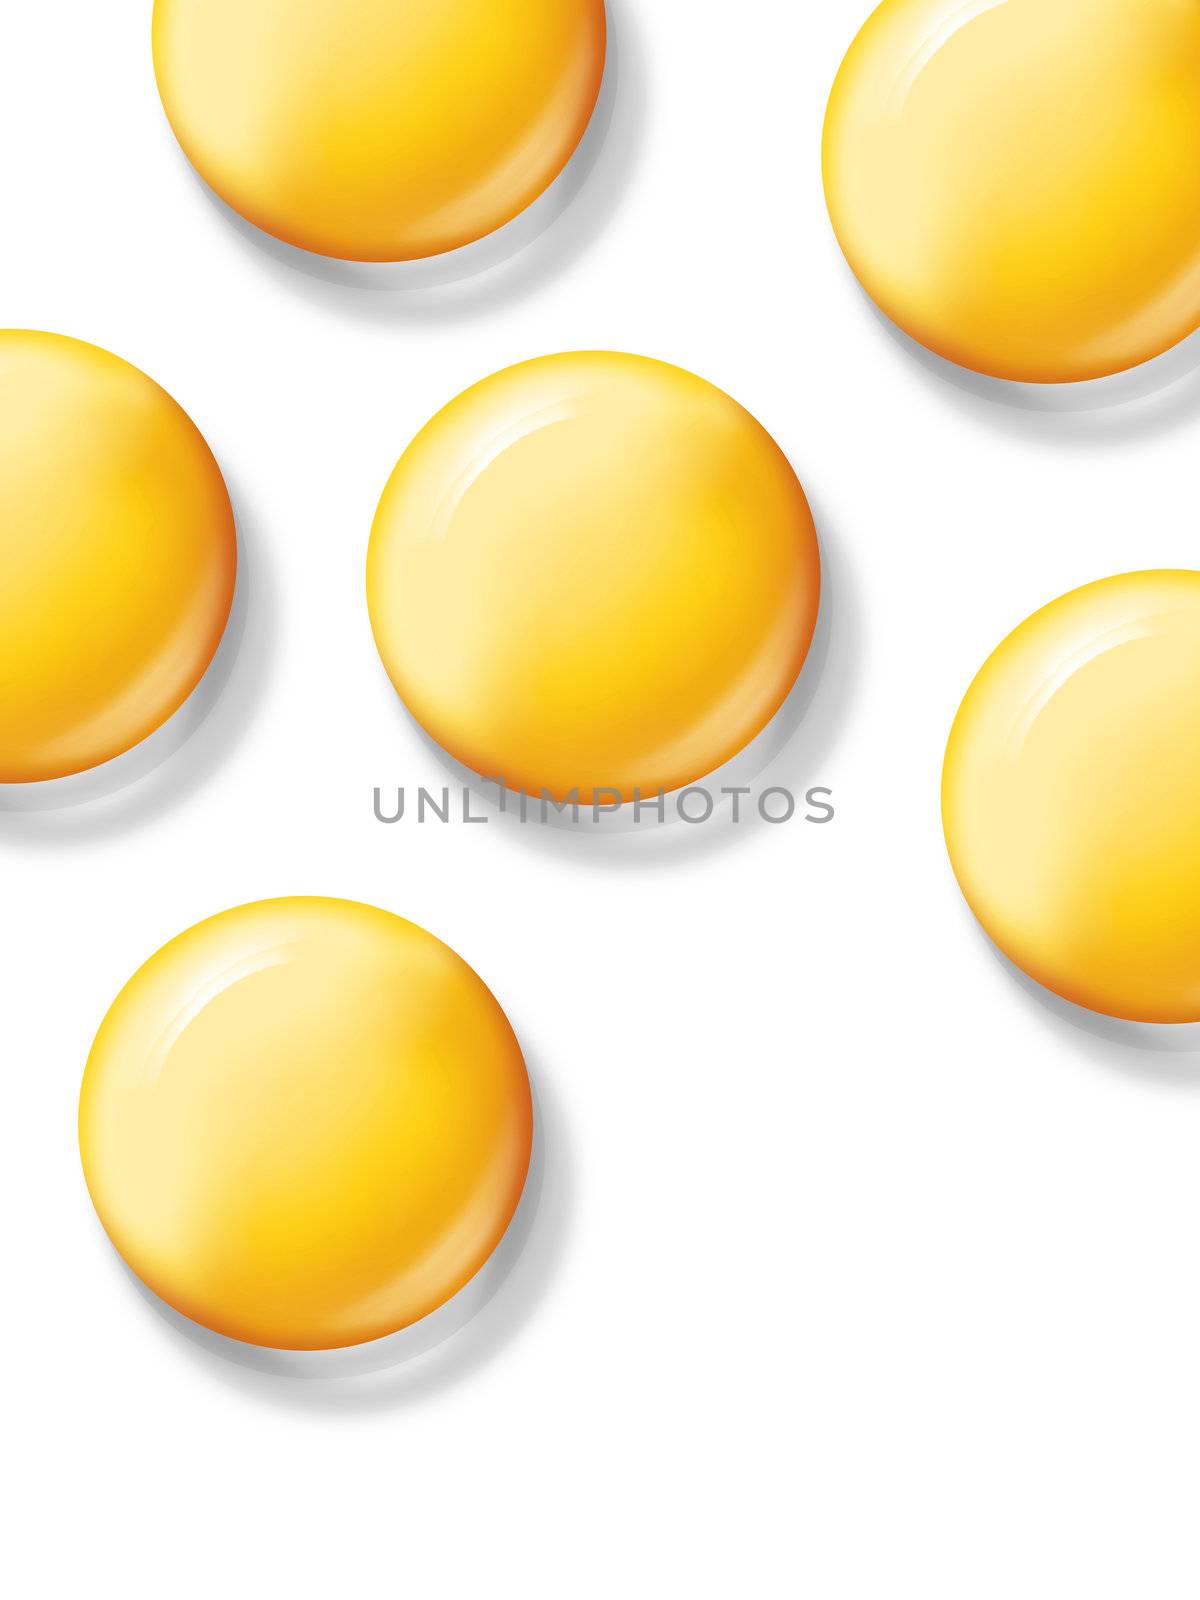 billboard eggs on white background by butenkow